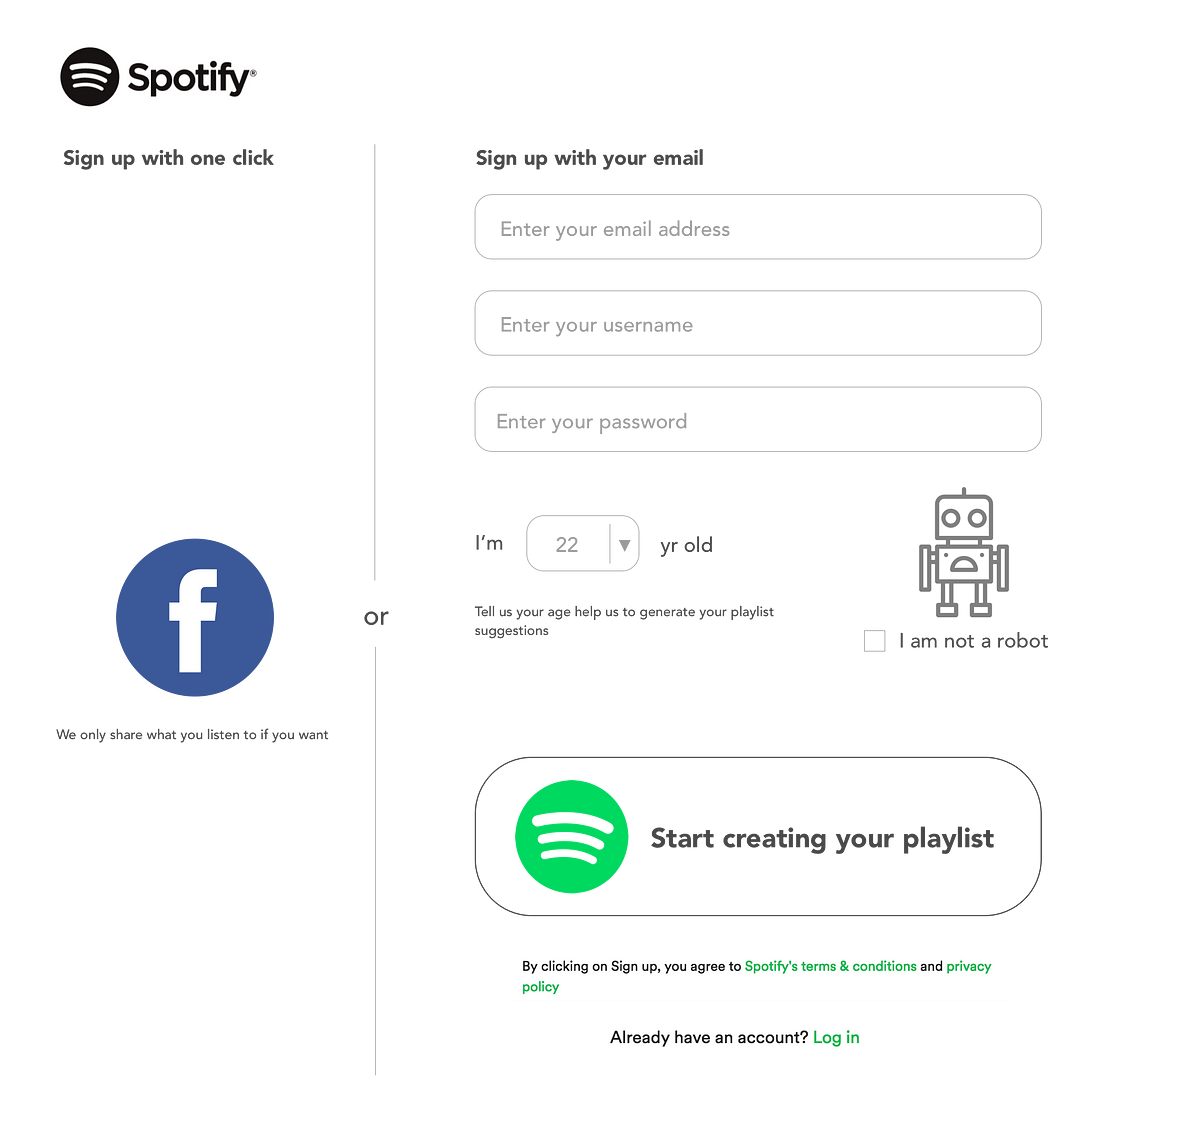 Spotify designer moves to Facebook